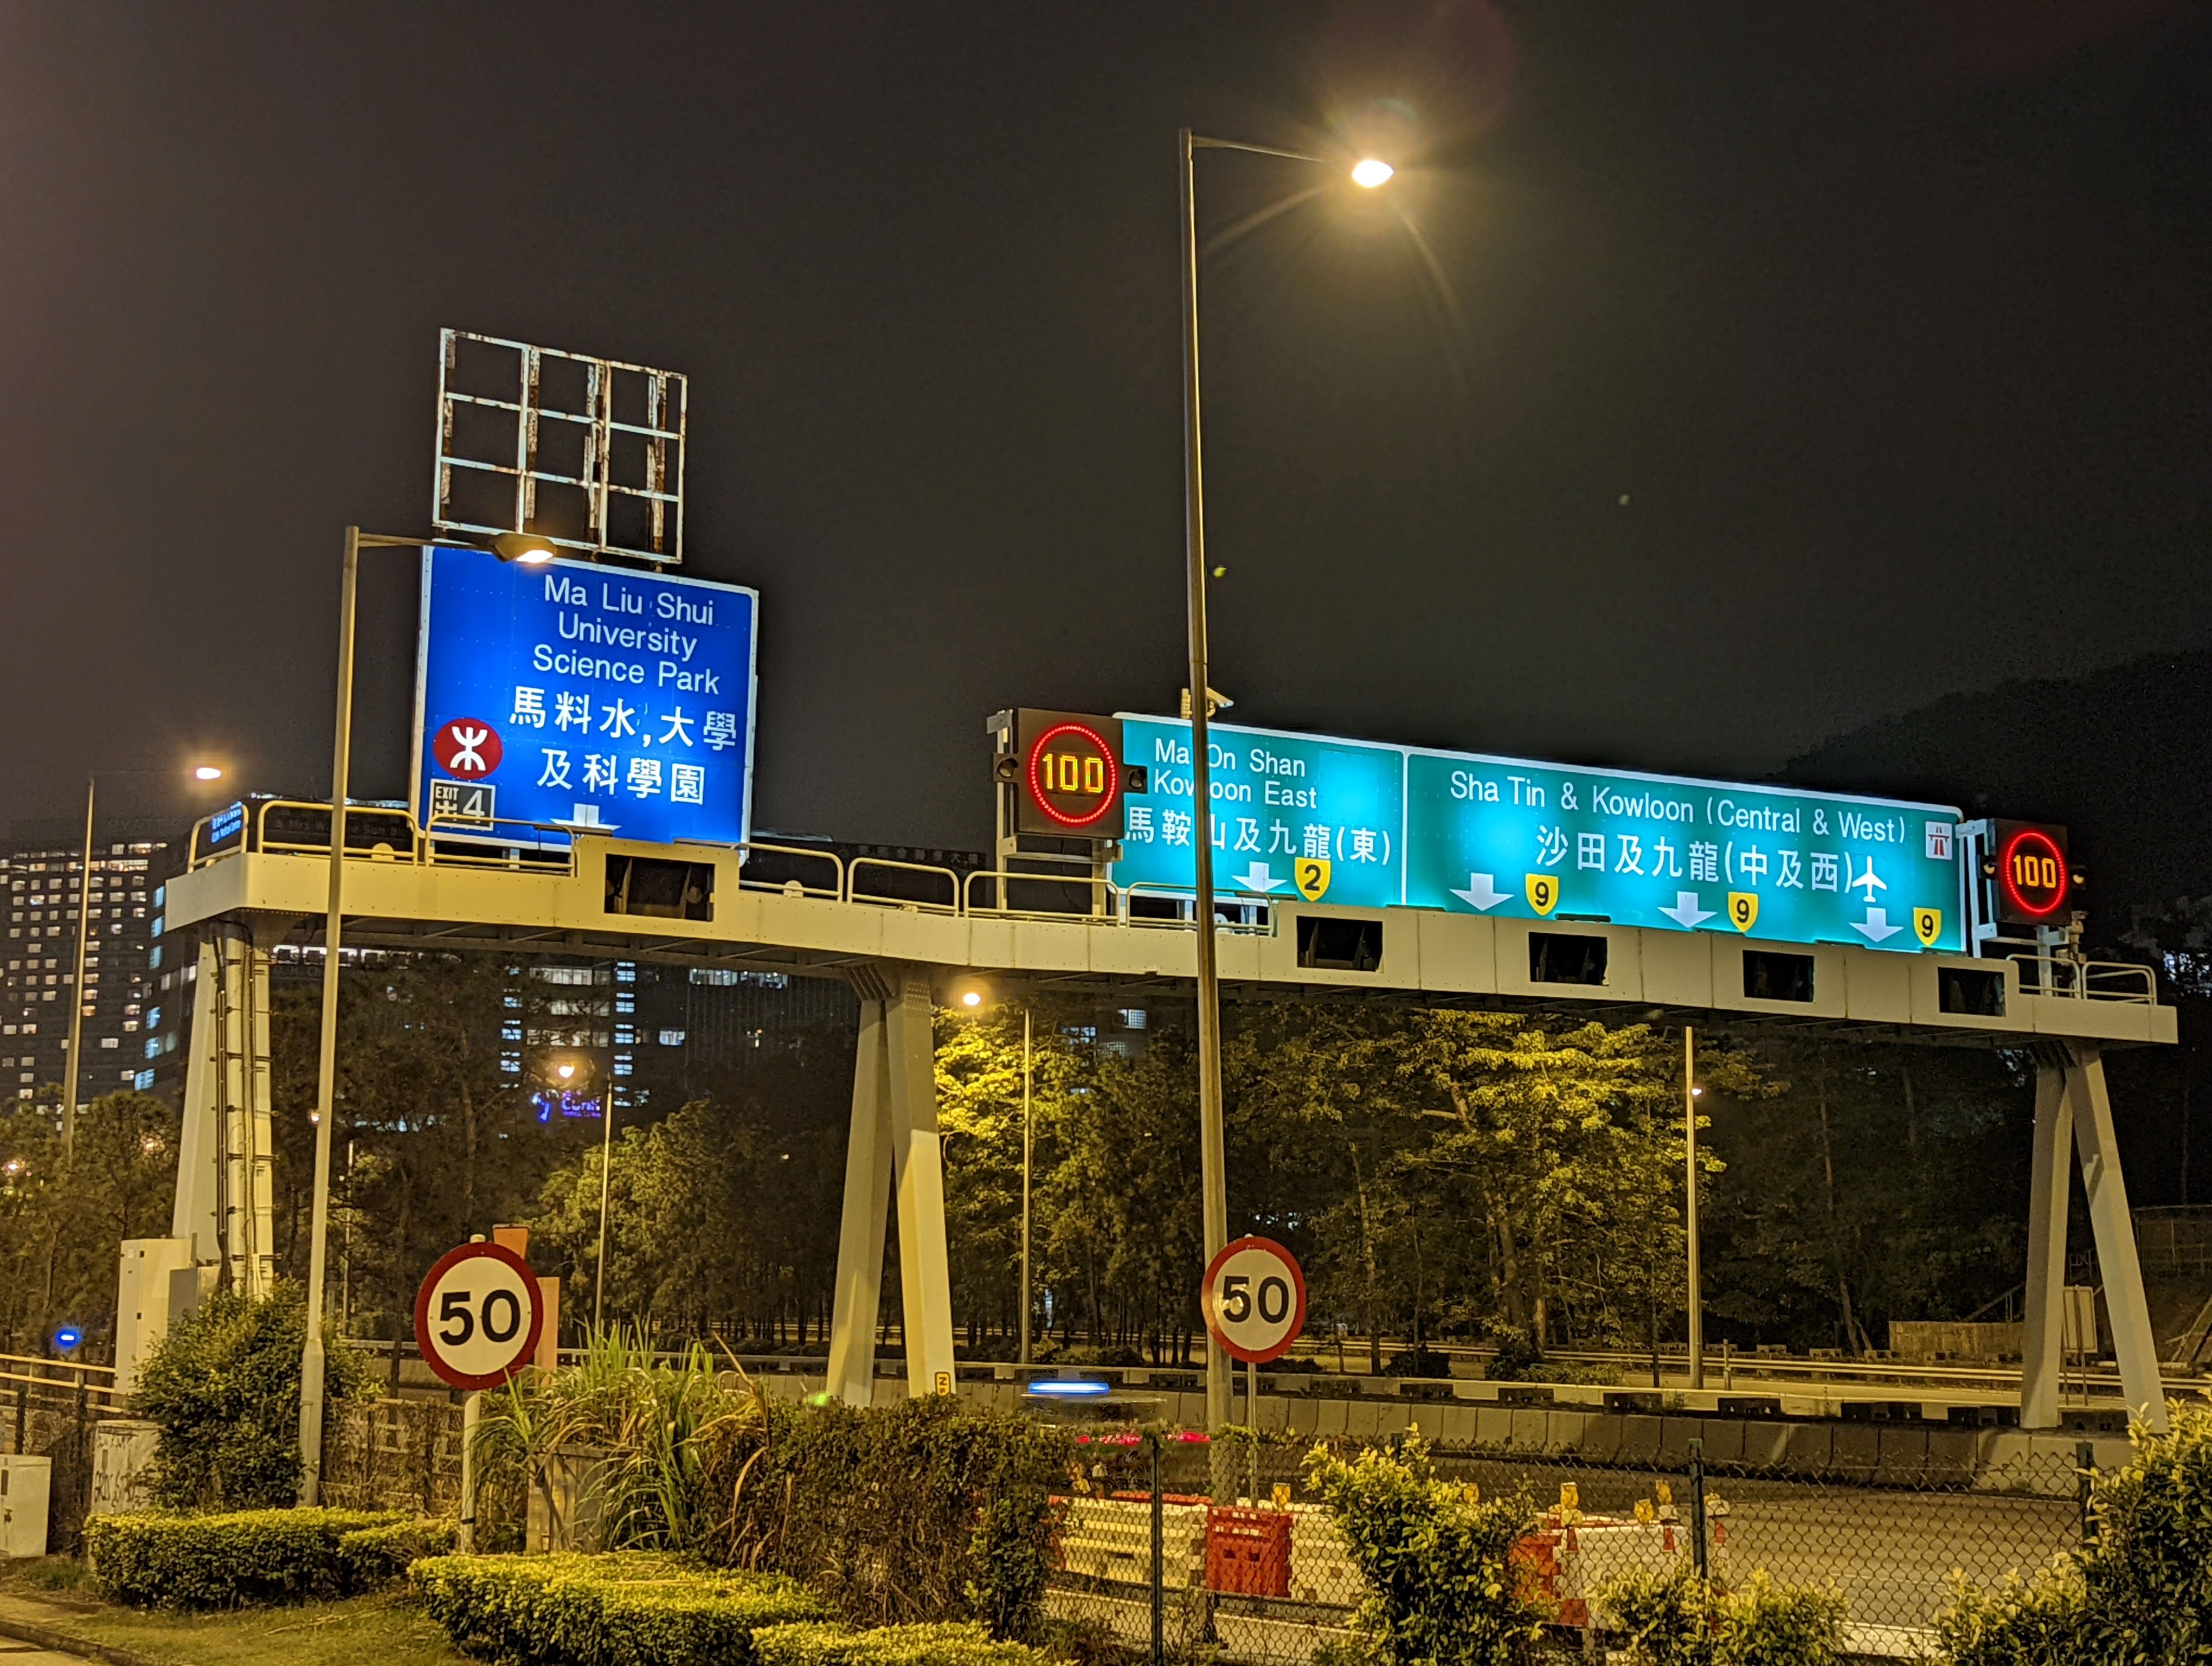 Photo 4: LED wall washer at sign gantry at Tolo Highway, Tai Po